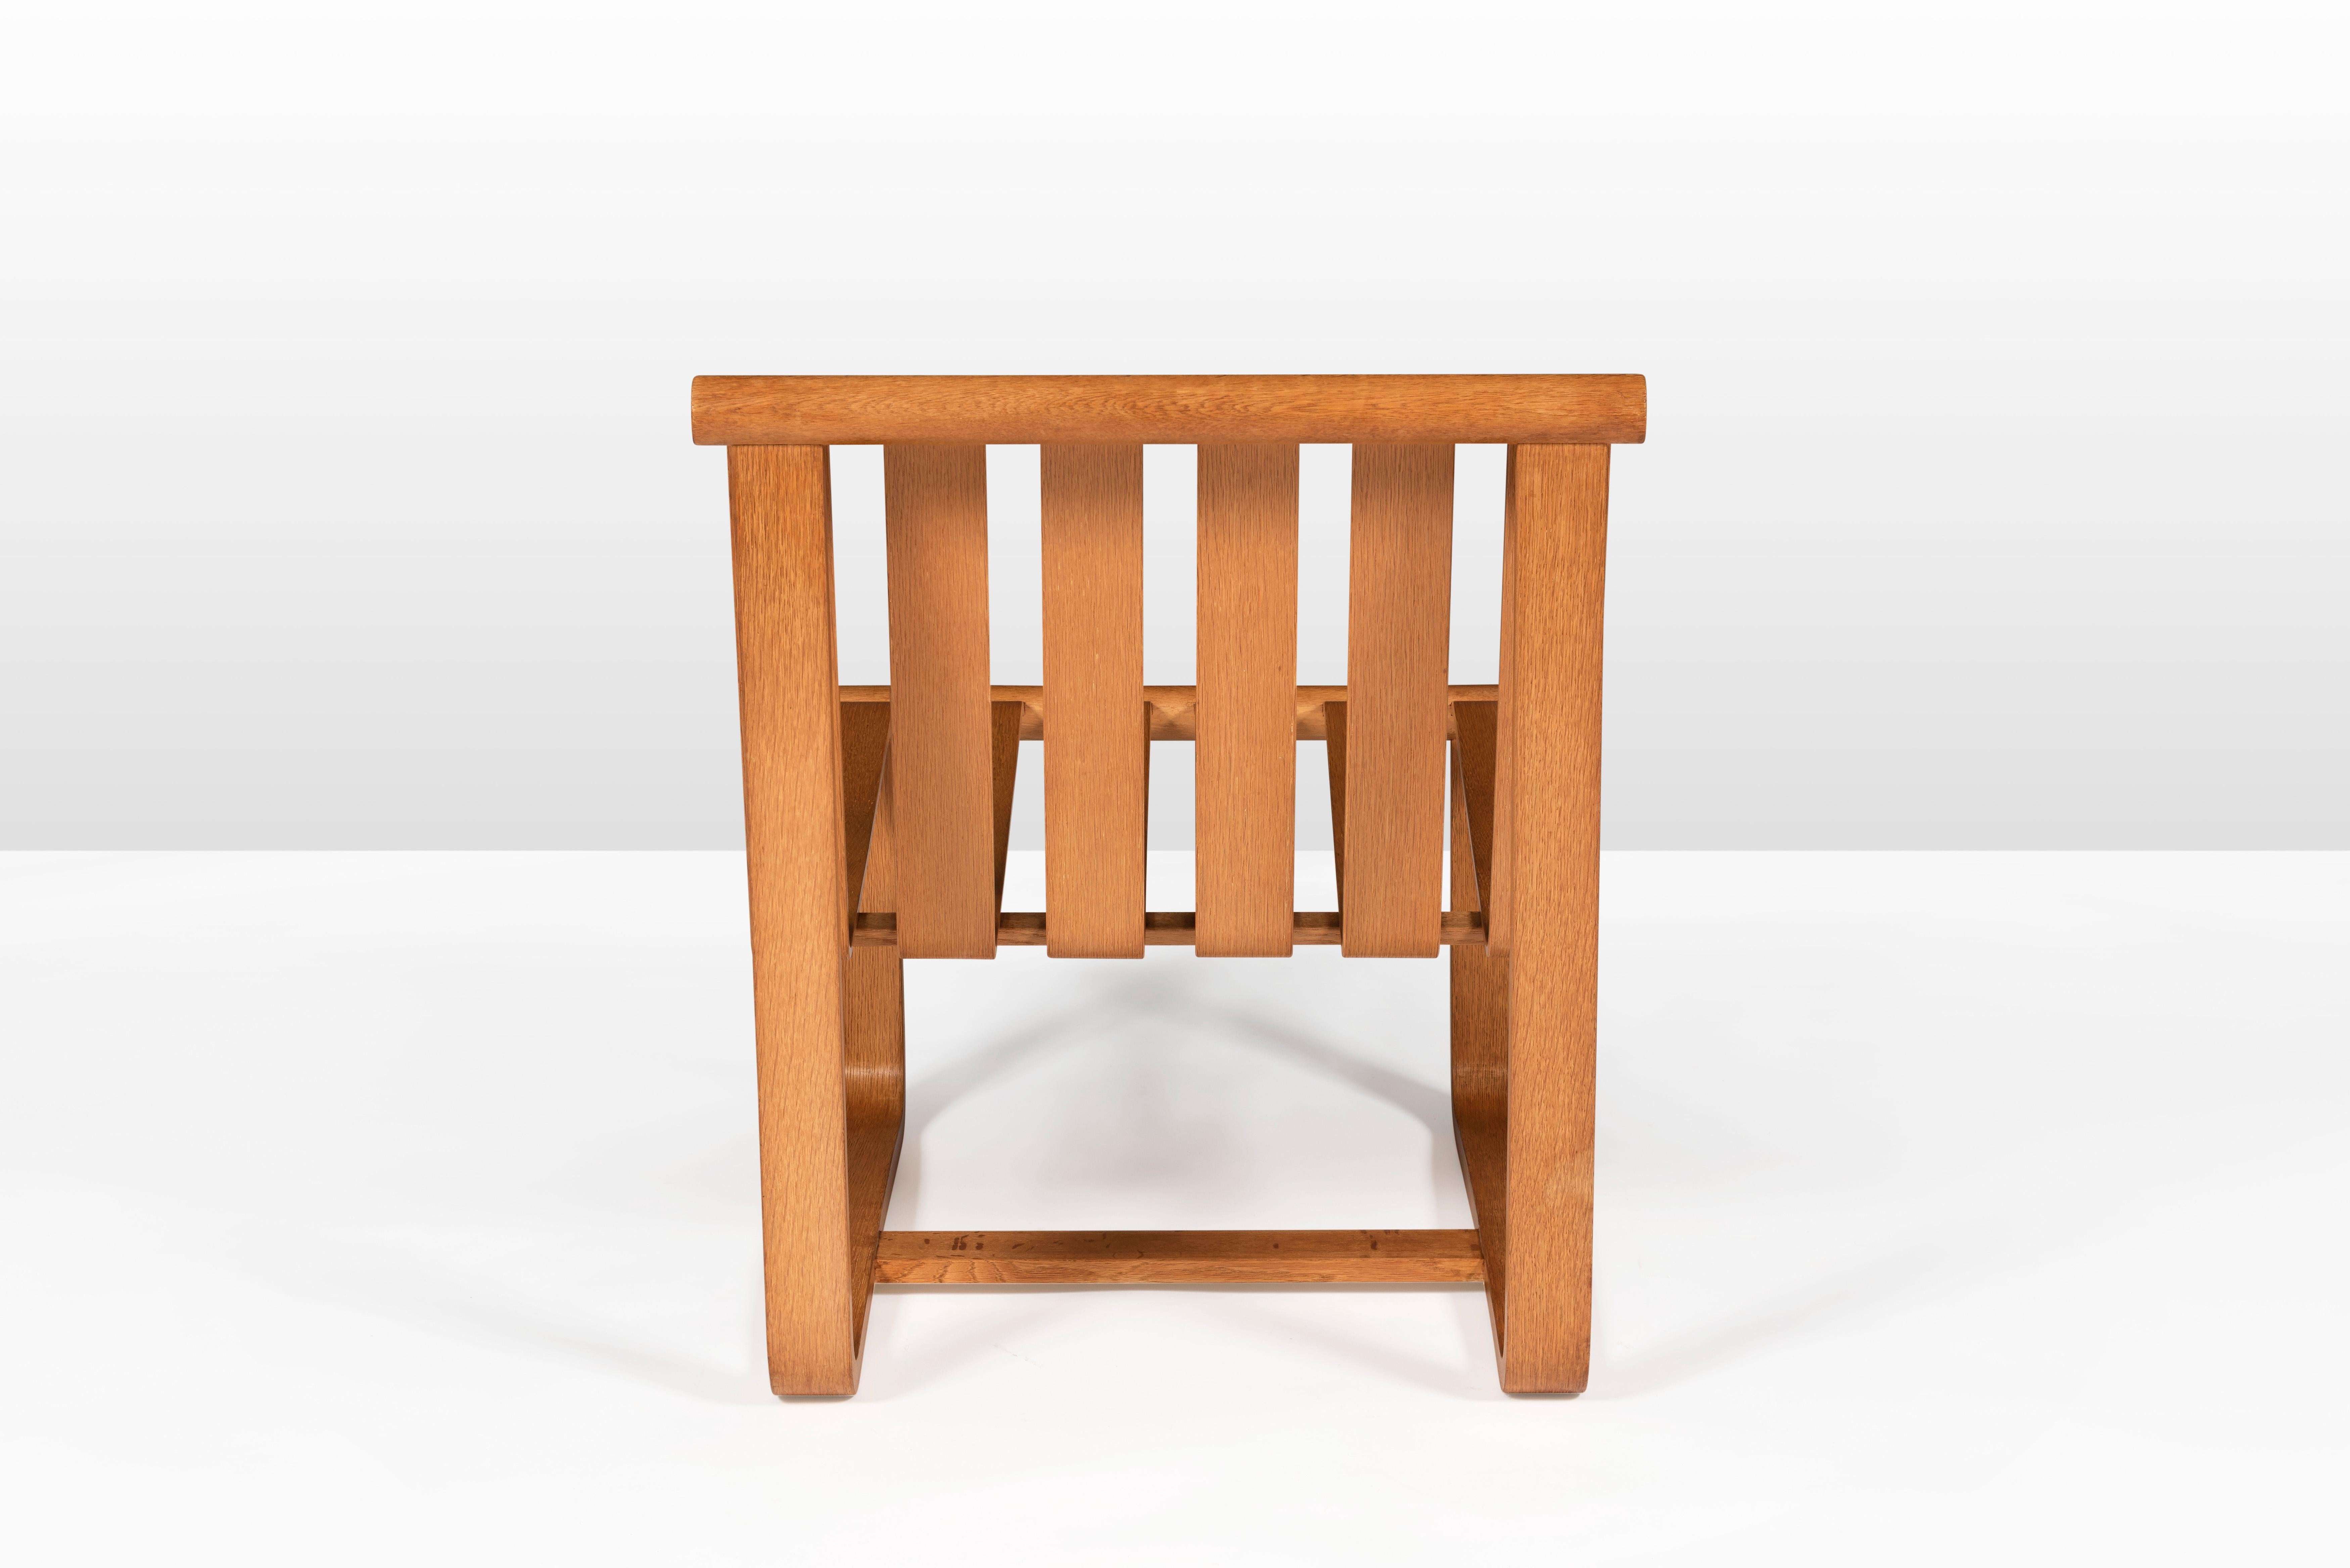 Minimalist Lounge Chair by Katsuo Matsumura